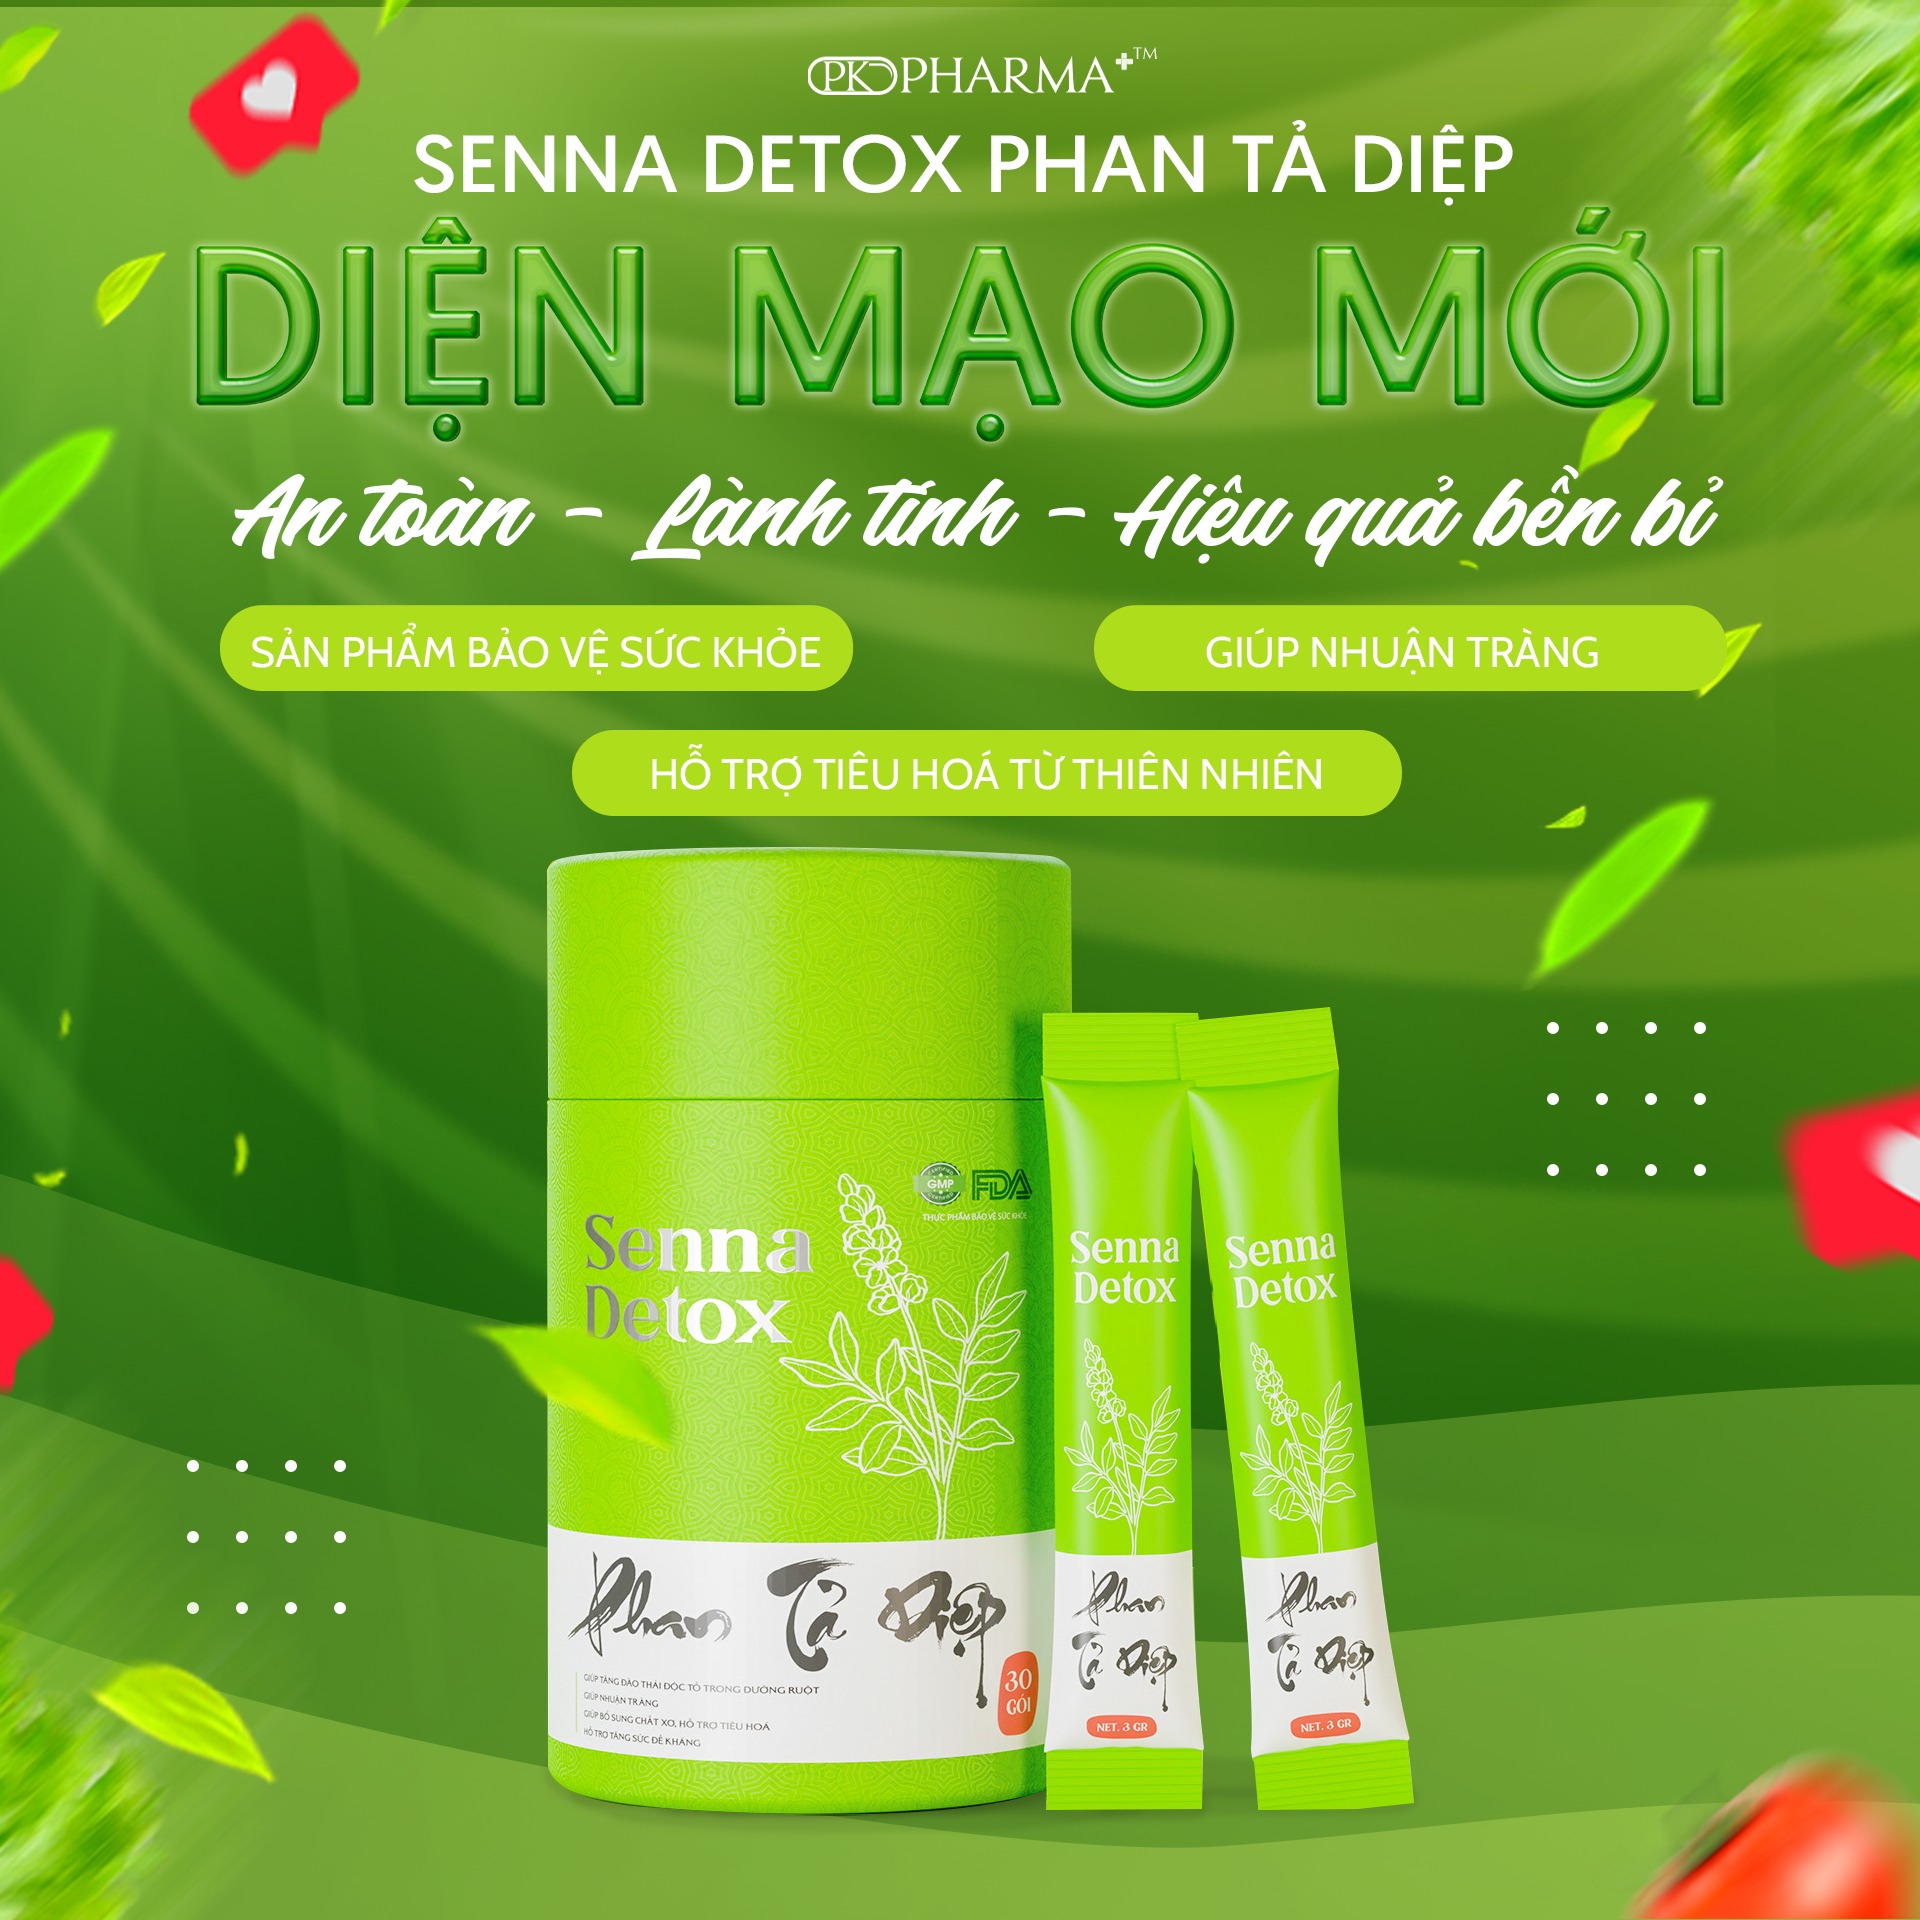 senna-detox-phan-ta-diep-pk-pharma-thai-doc-ruot-nhuan-trang-bo-sung-chat-xo-tieu-hoa-tang-suc-de-khang